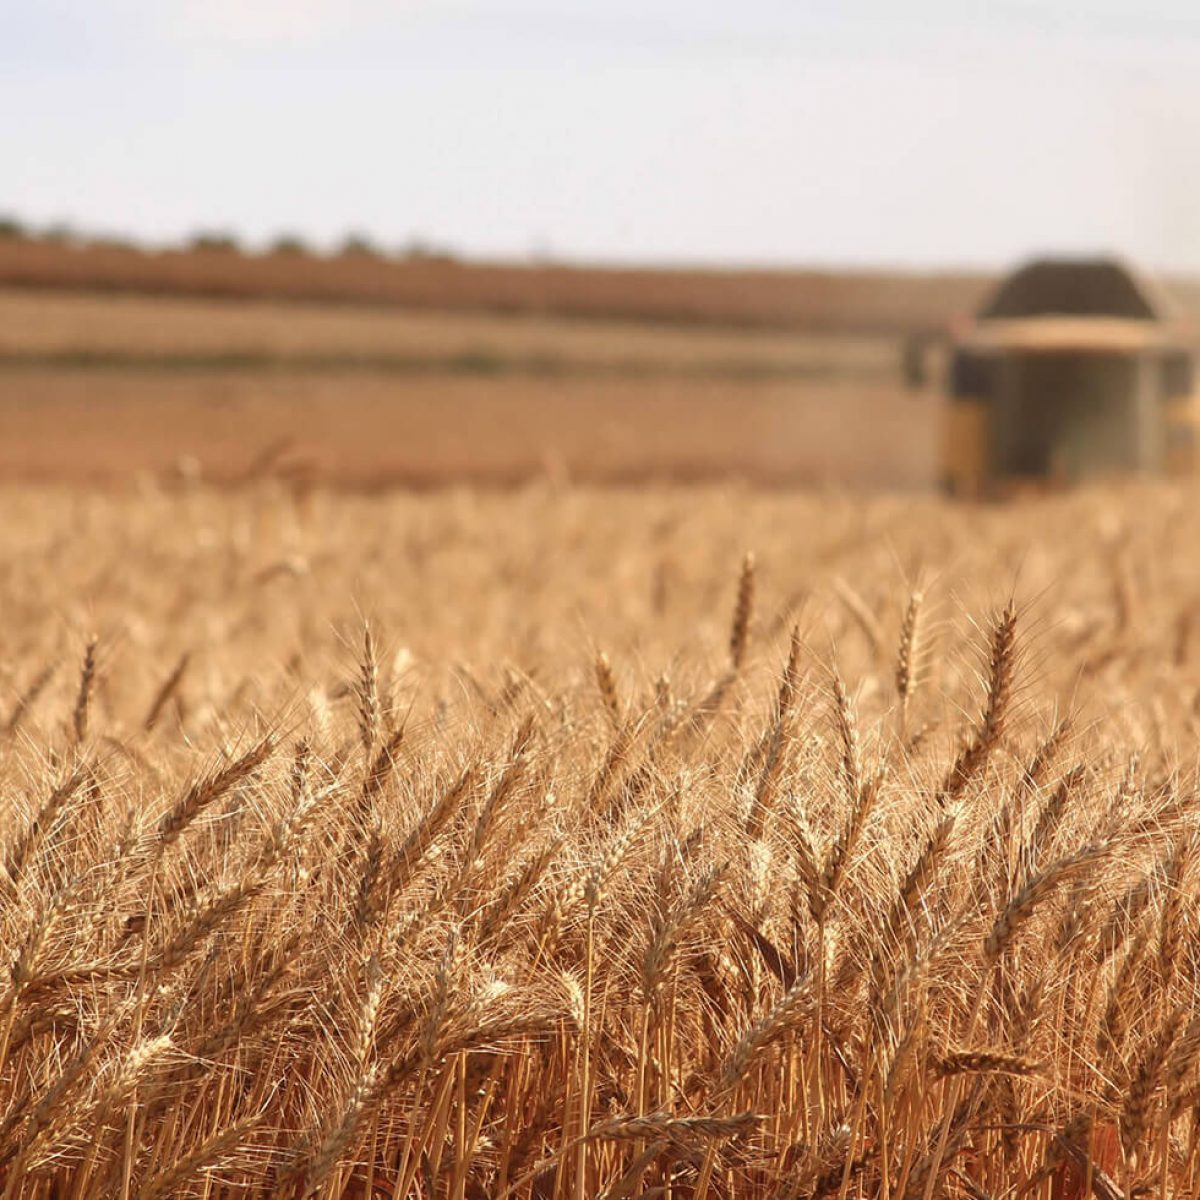 Harvesting wheat crop